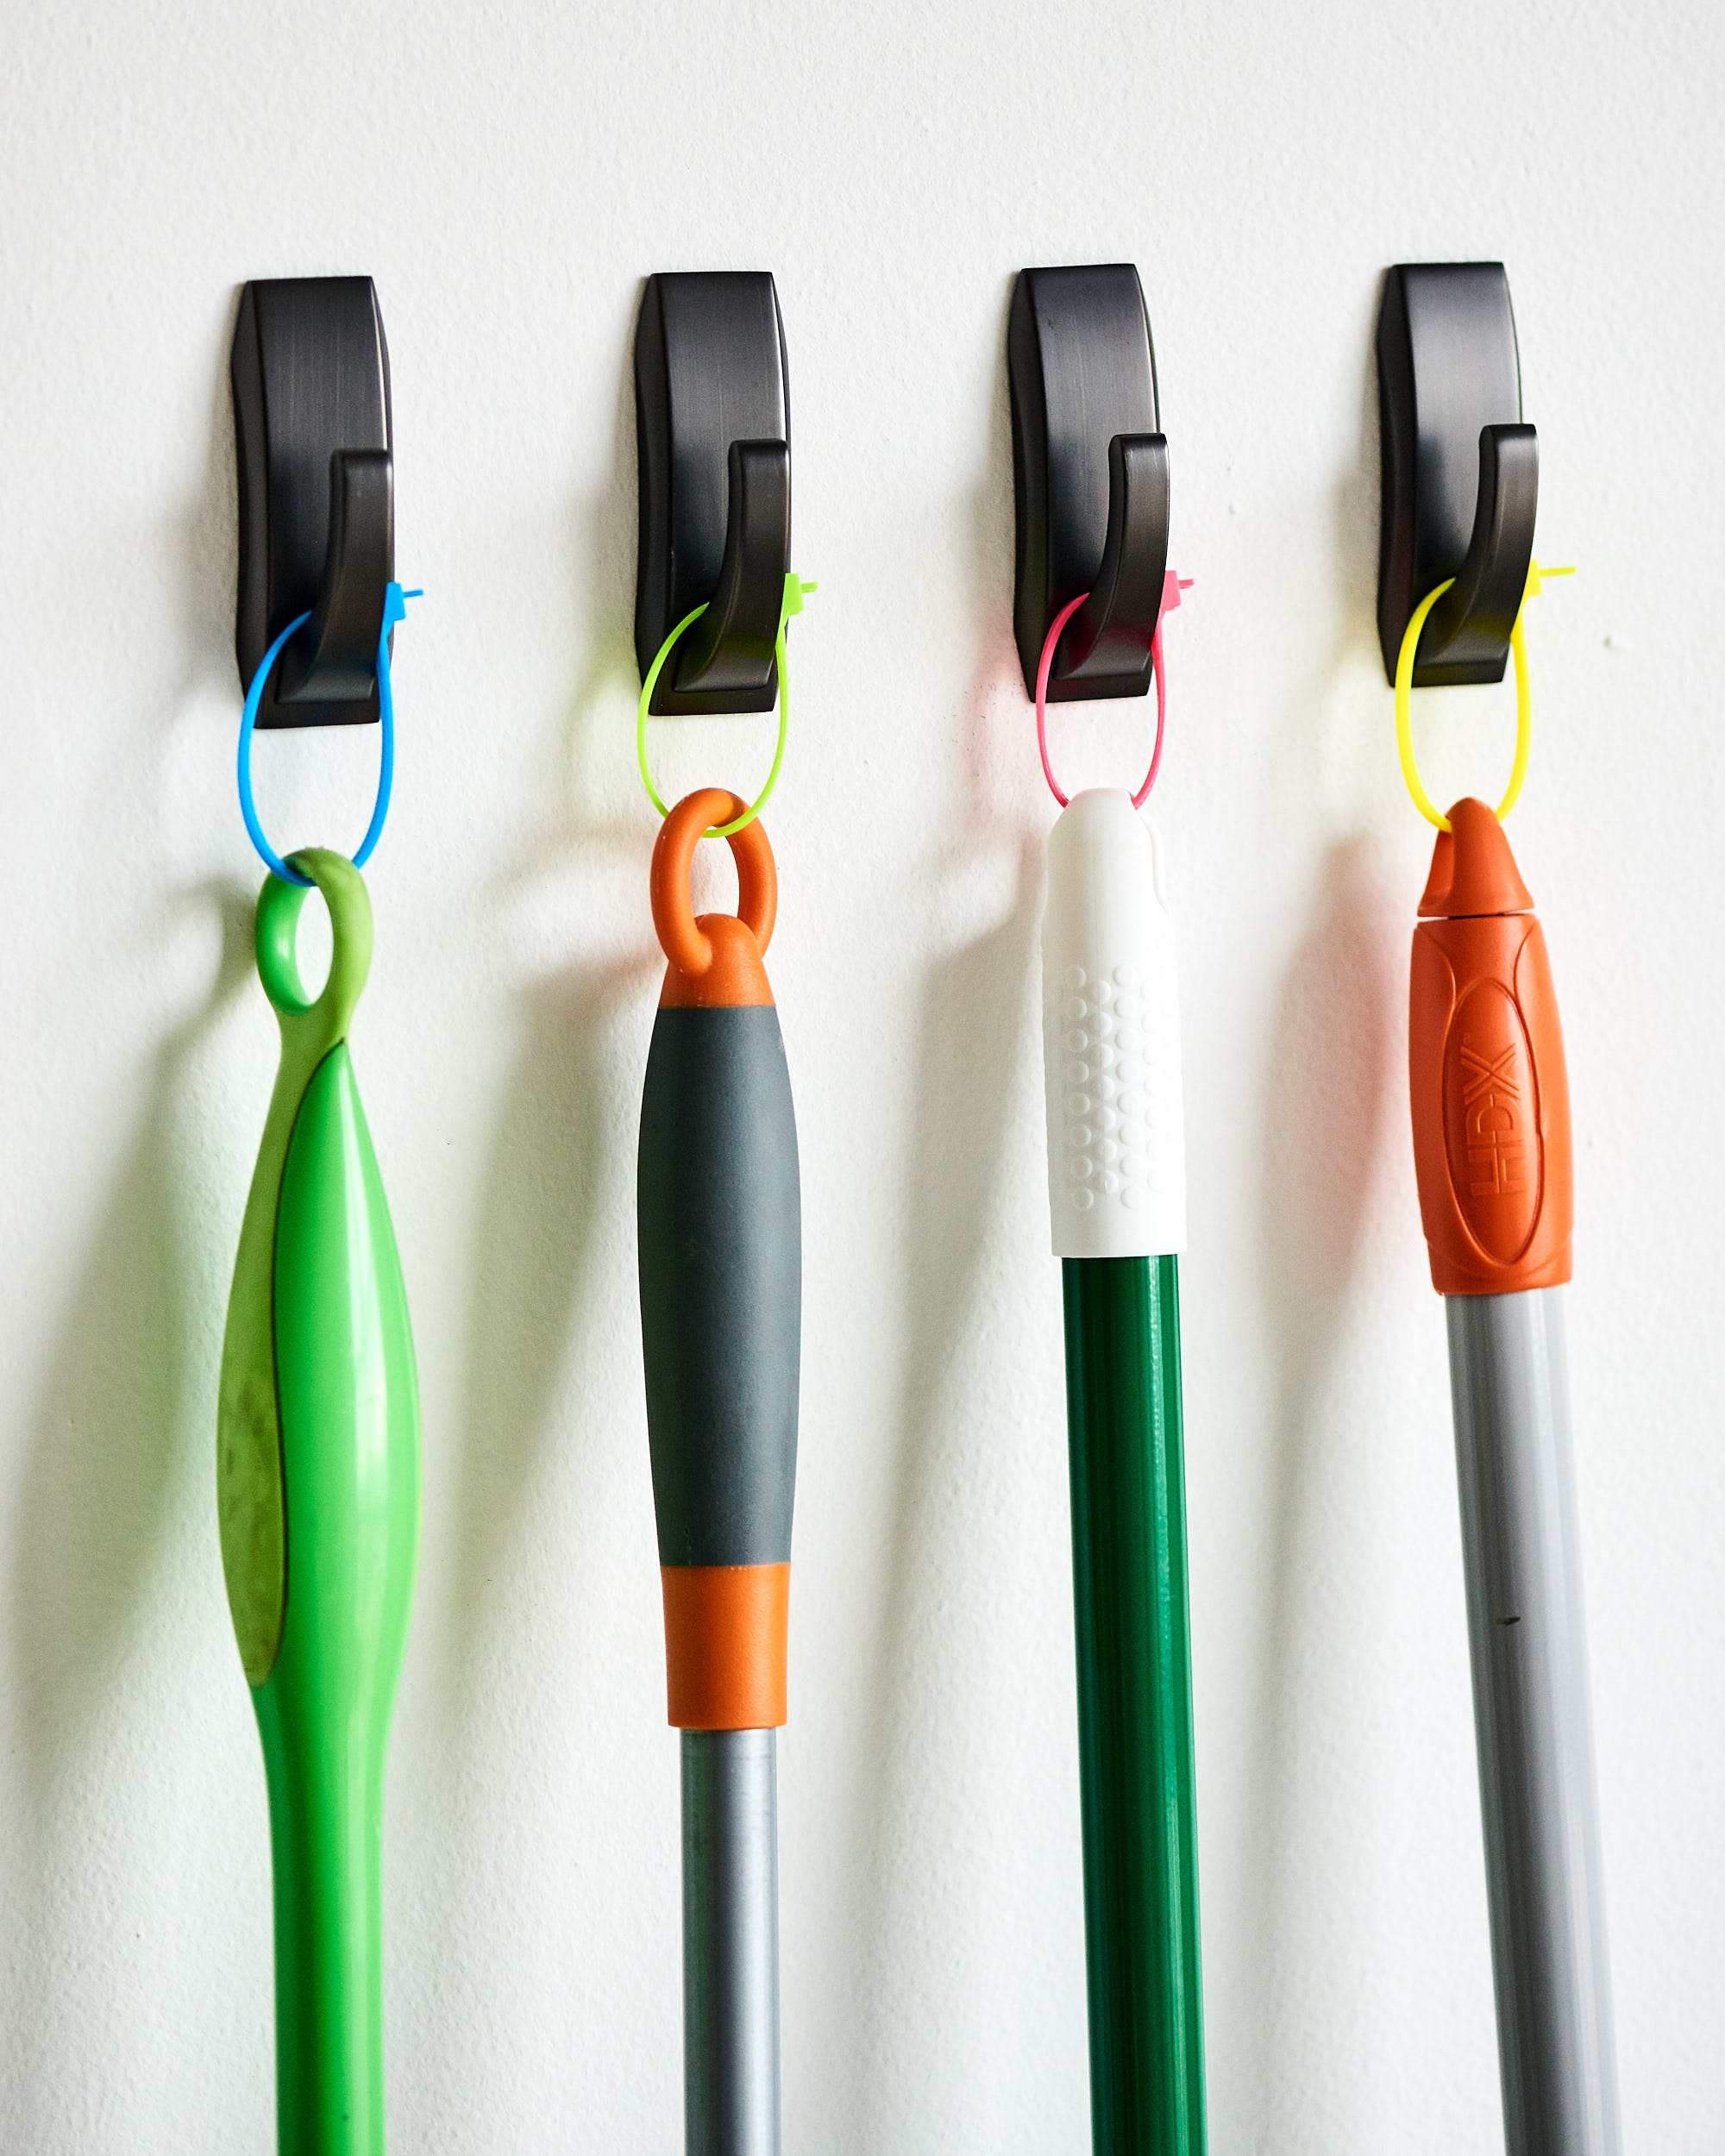 Try This Zip Tie Broom and Mop Storage Idea